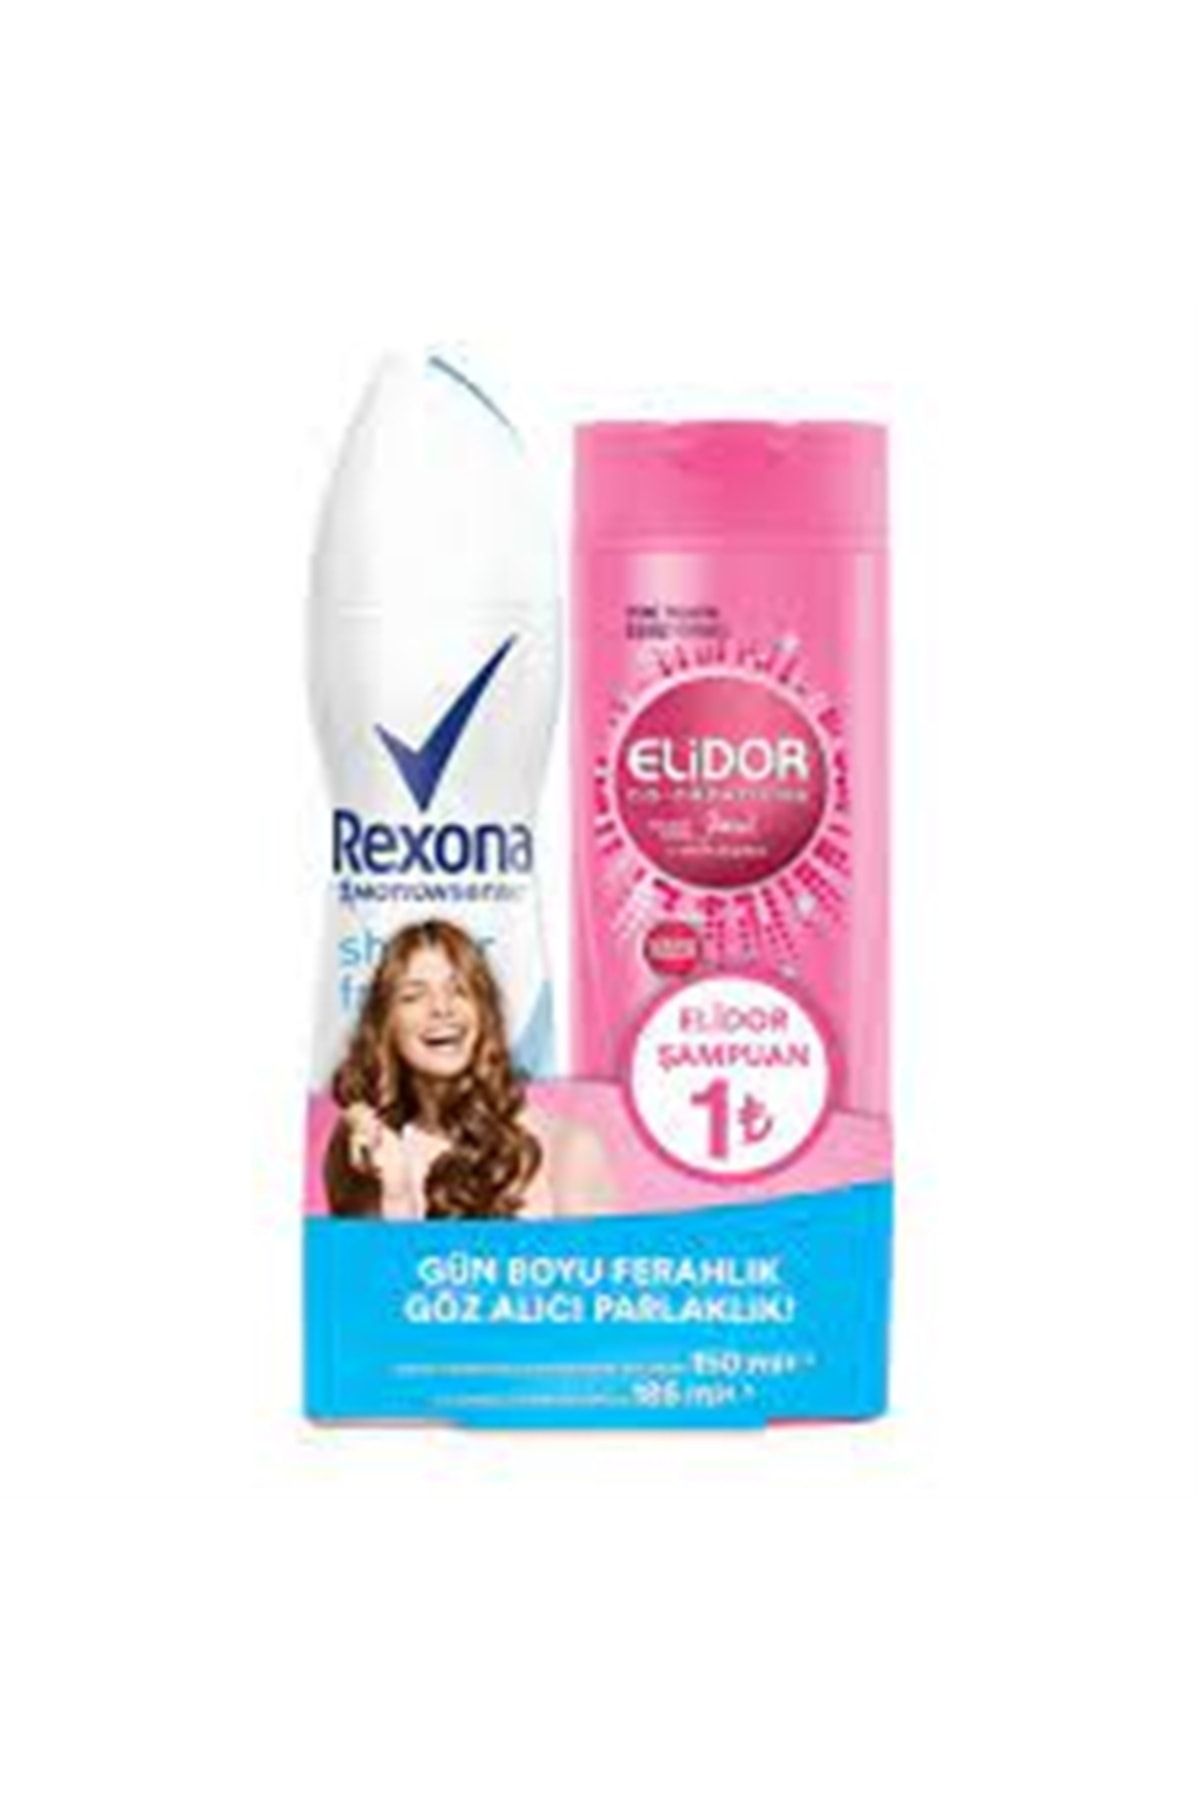 Rexona Motion Sens Deodorant 150ml Ve Elidor Şampuan 185ml Seti